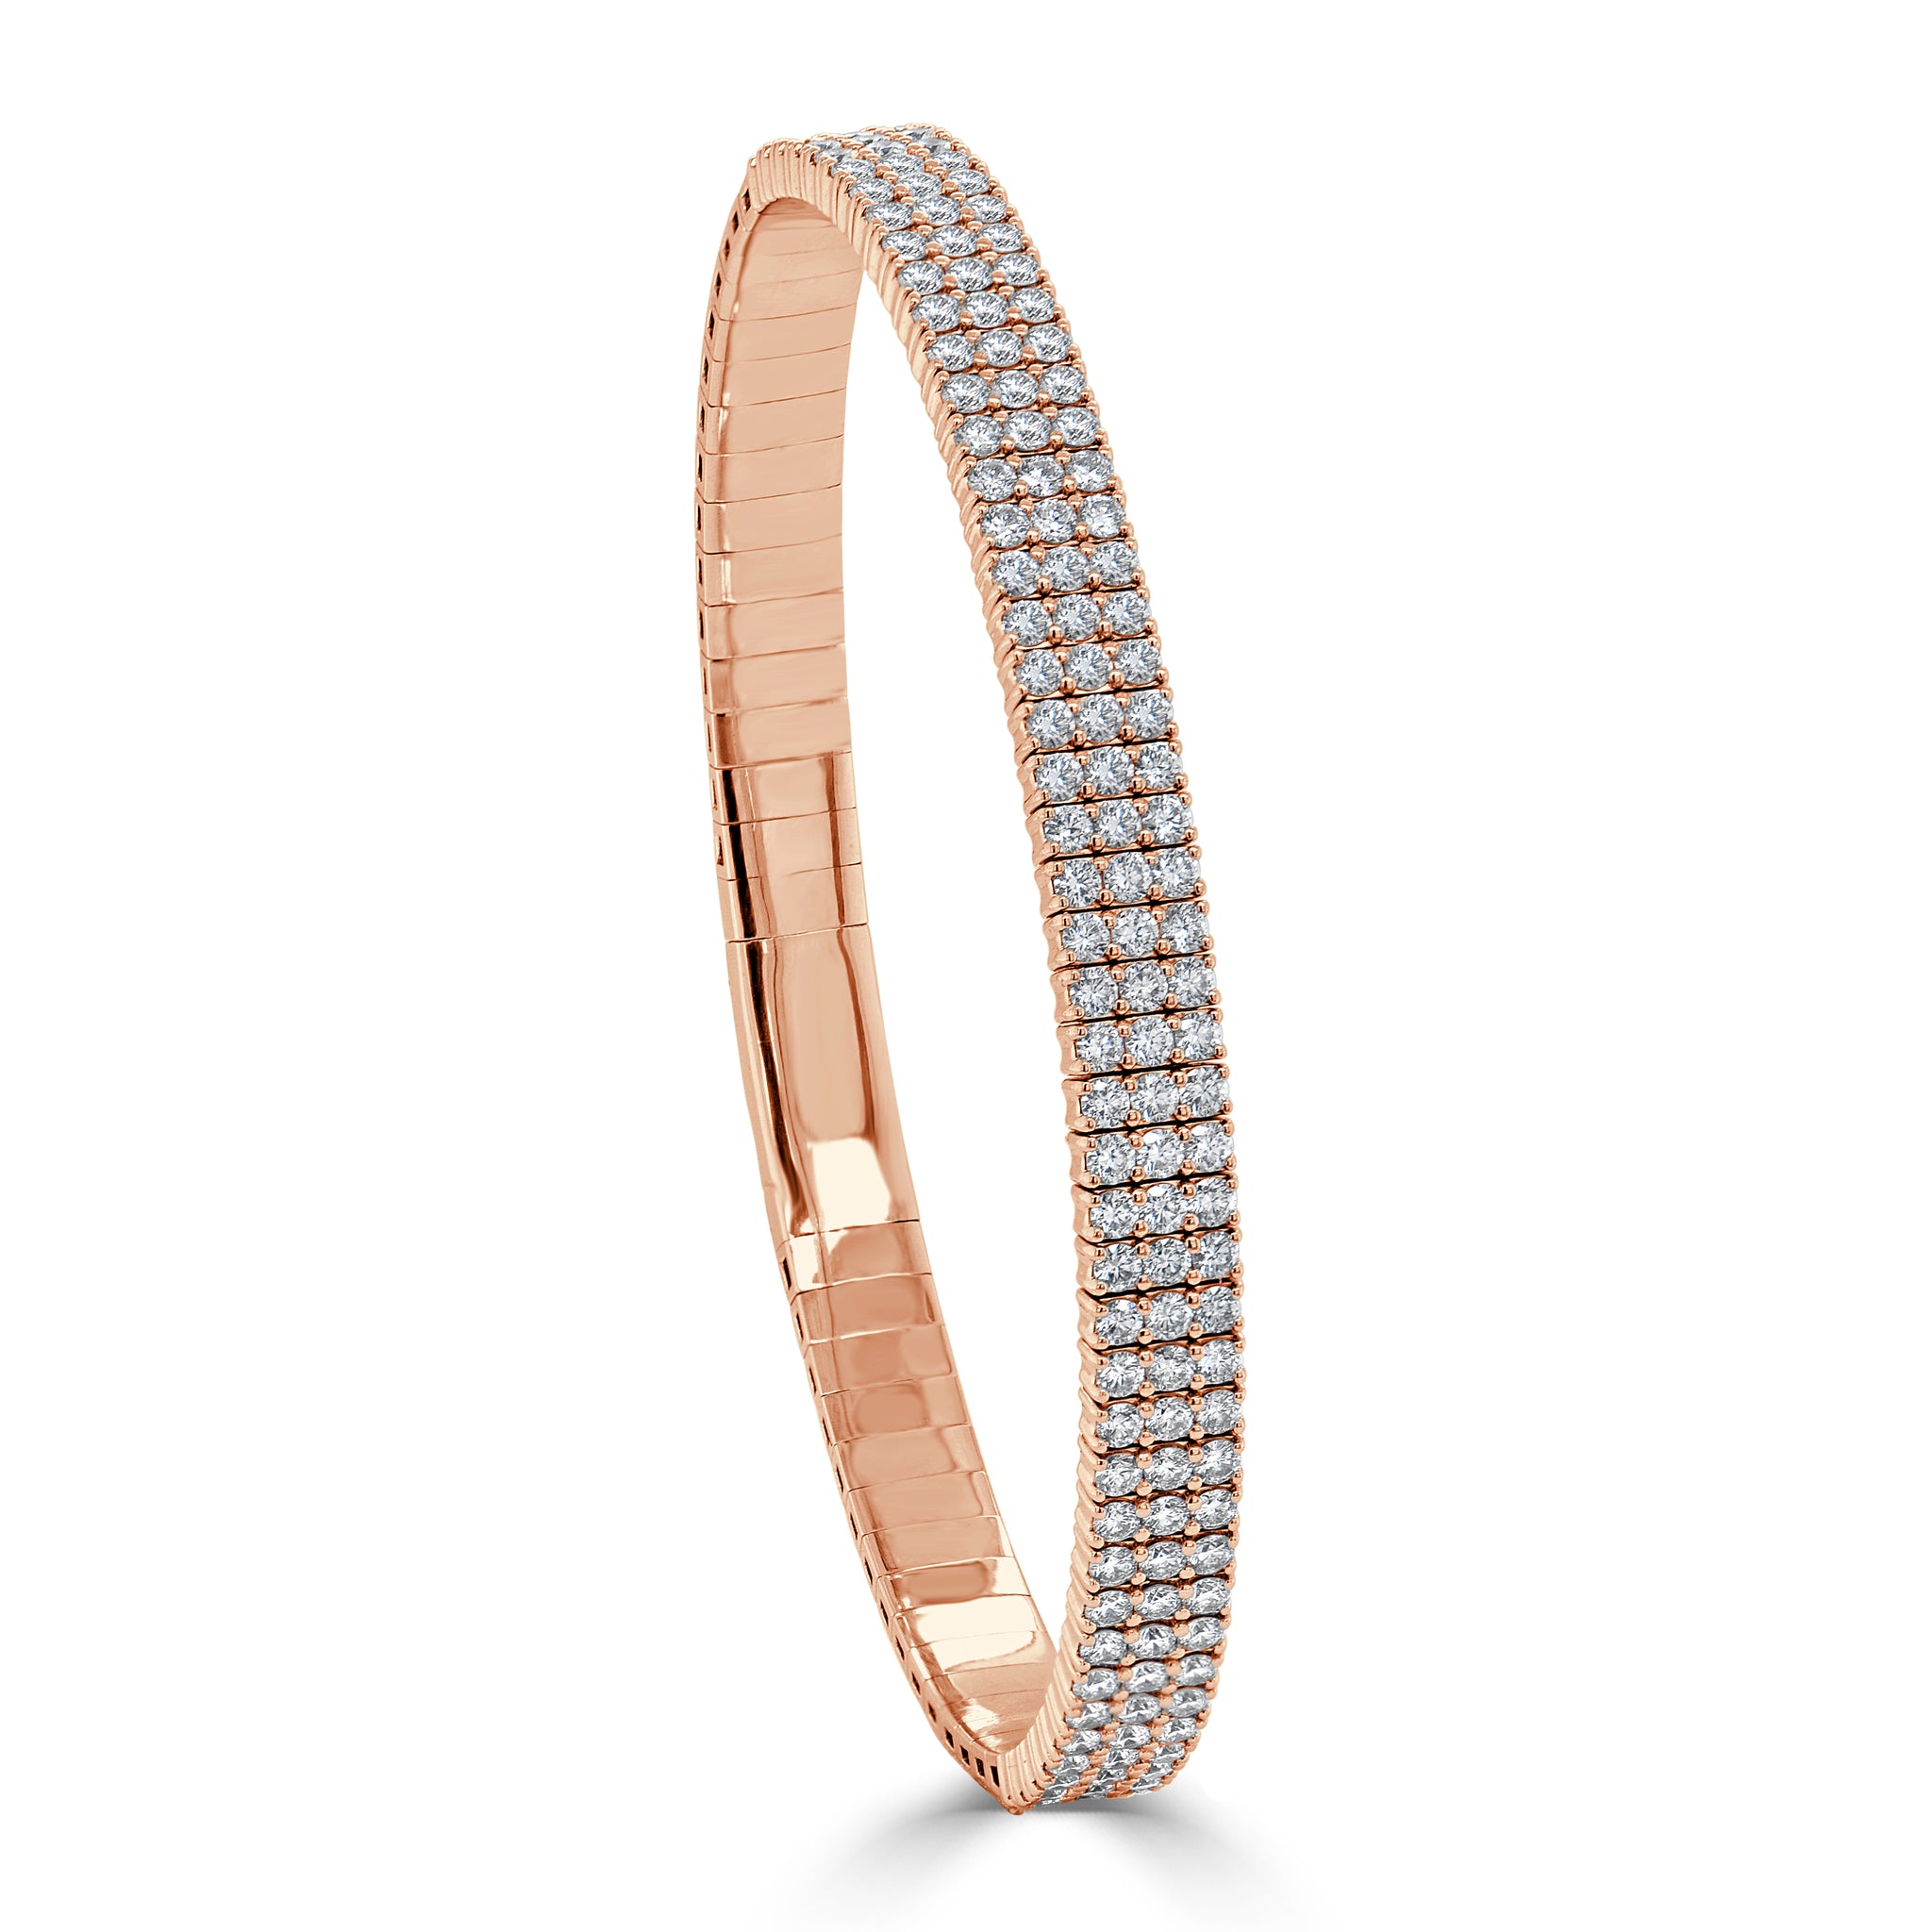 Buy Diamond Bangles Designs For Women Online - Vaibhav Jewellers